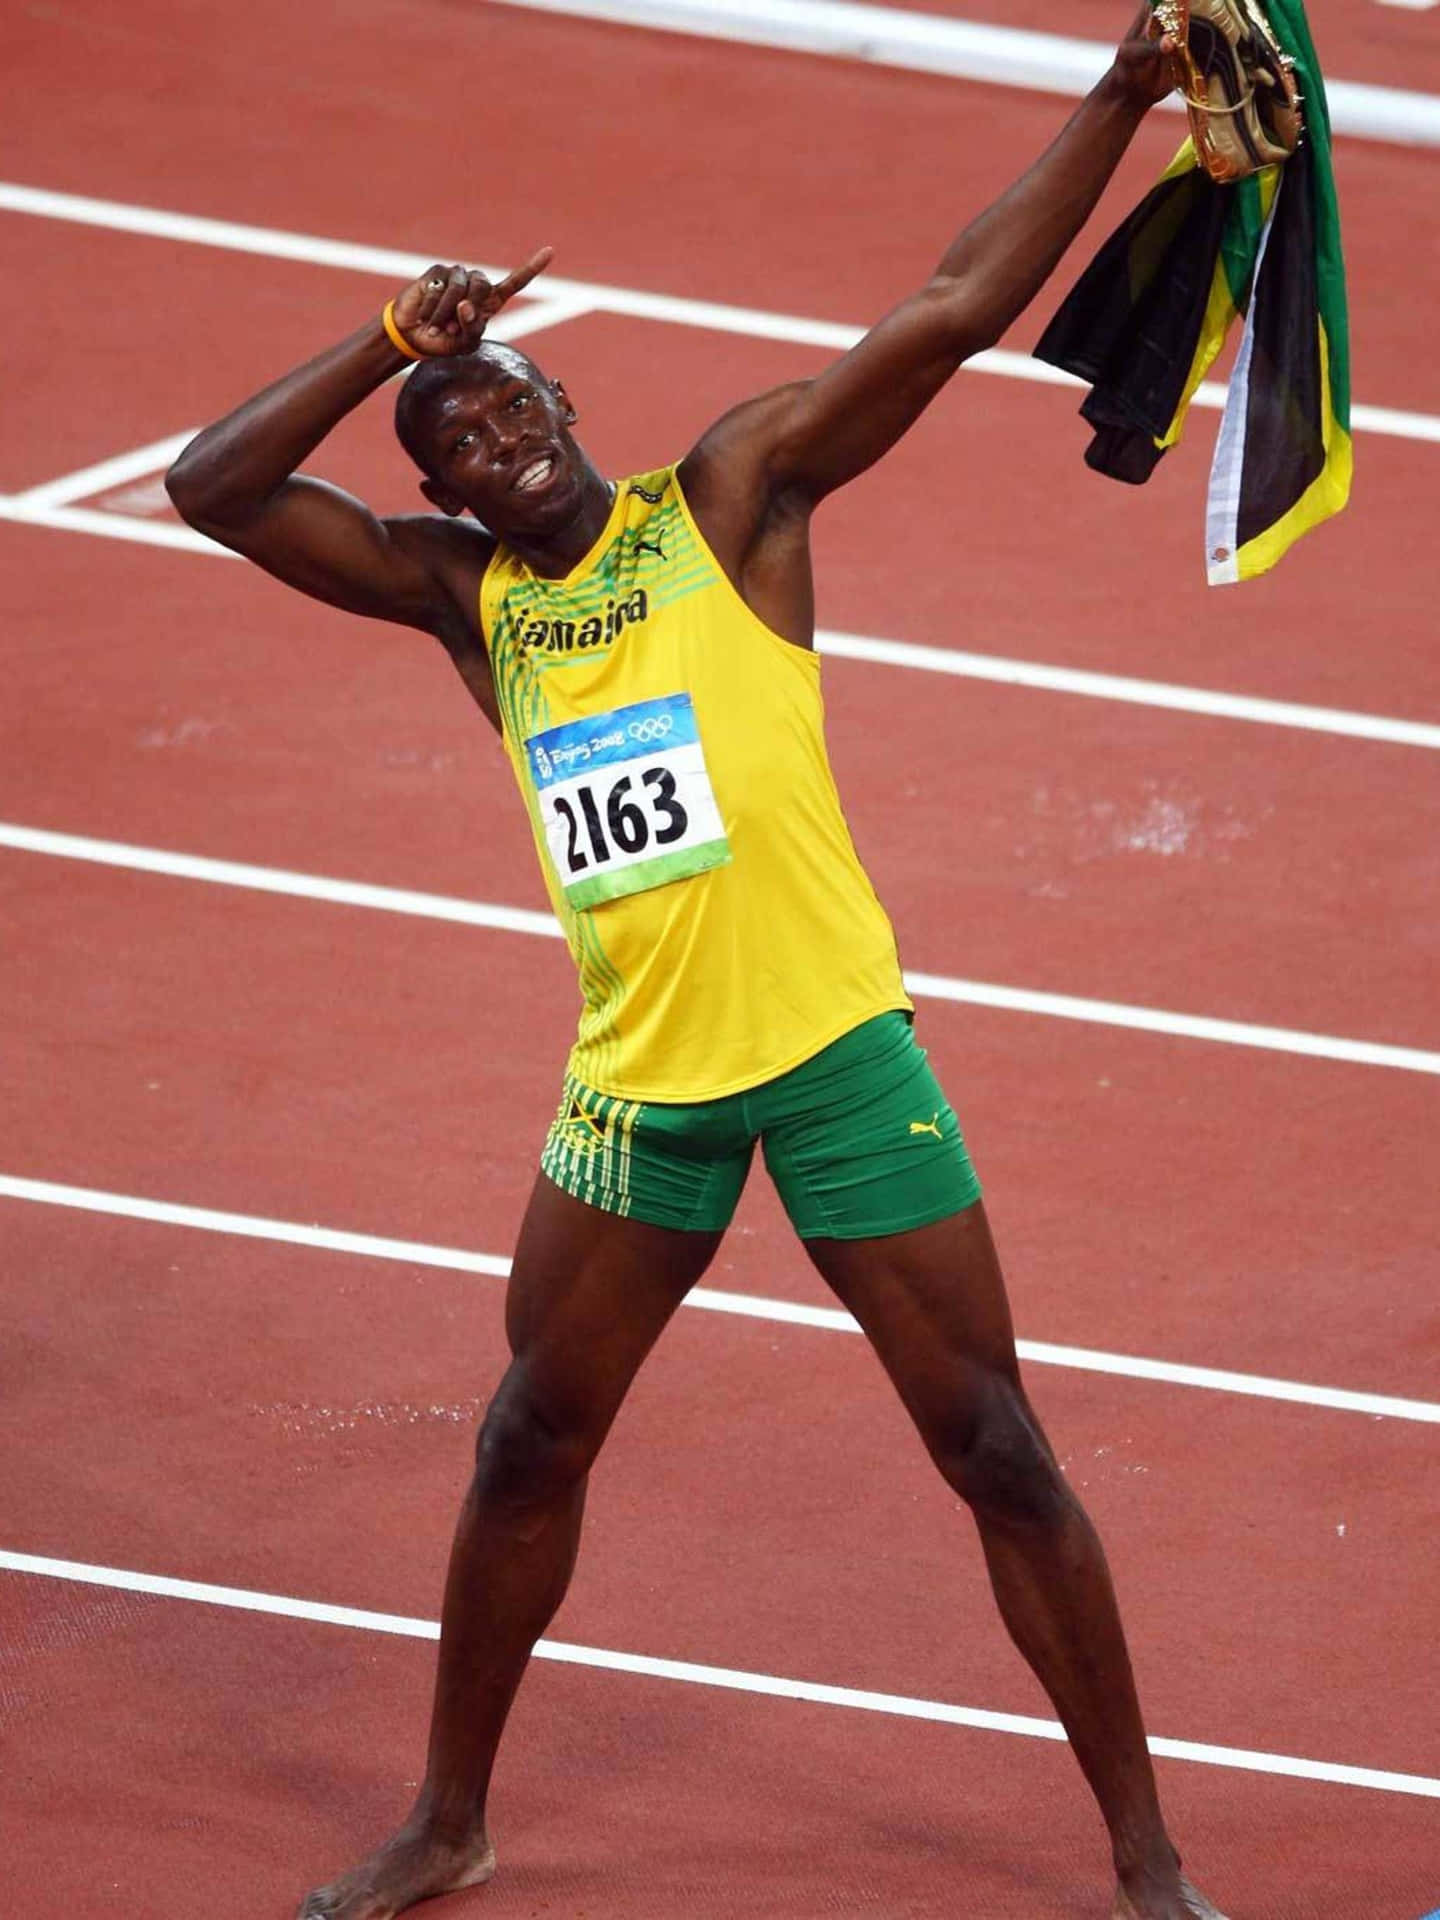 Usain Bolt To Trademark His Iconic Celebration Pose | Athletics News